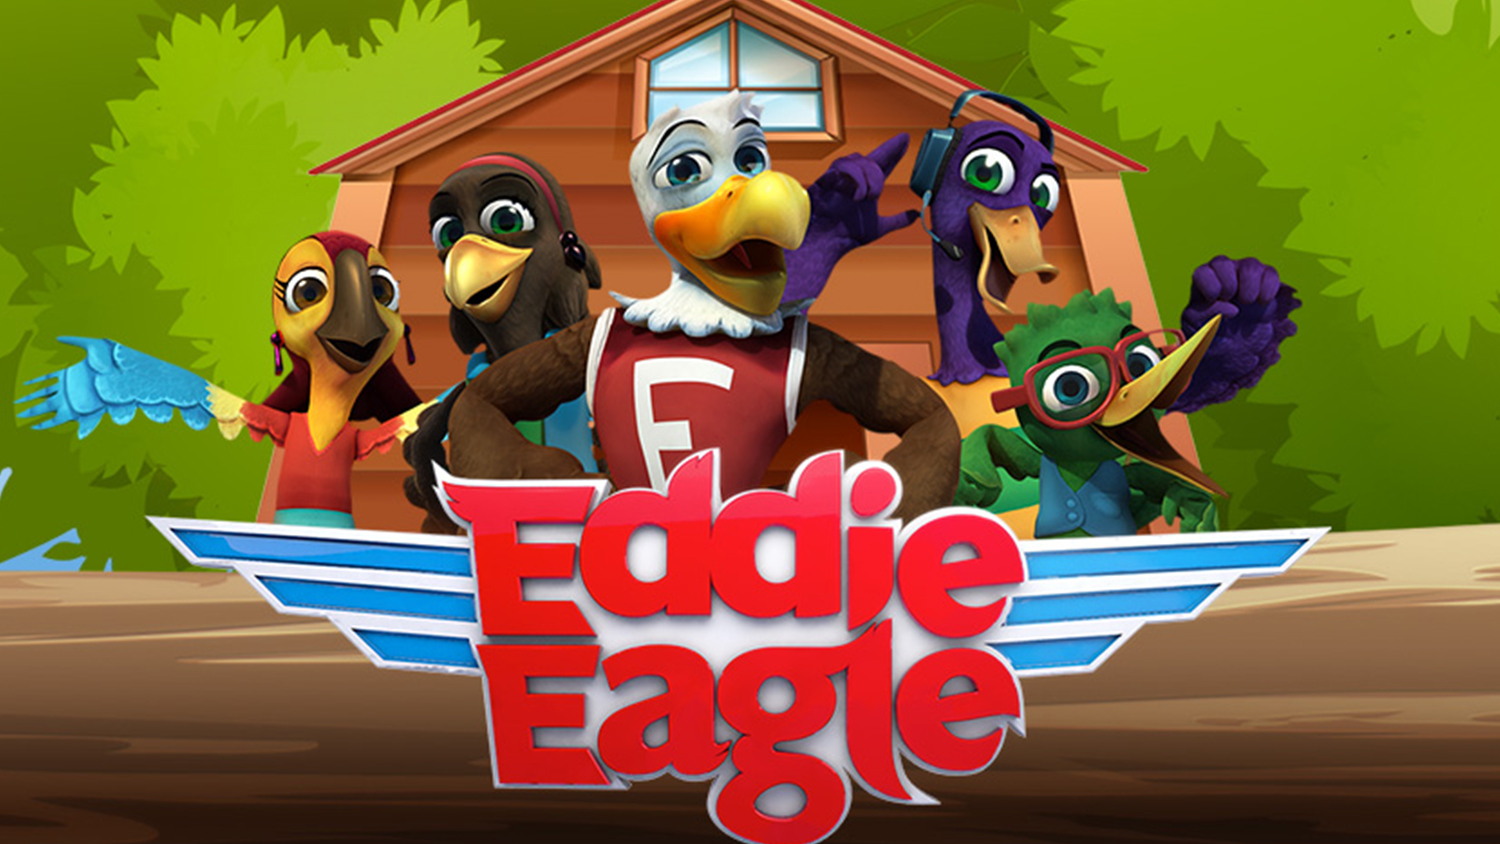 Bringing Eddie Eagle to the Community